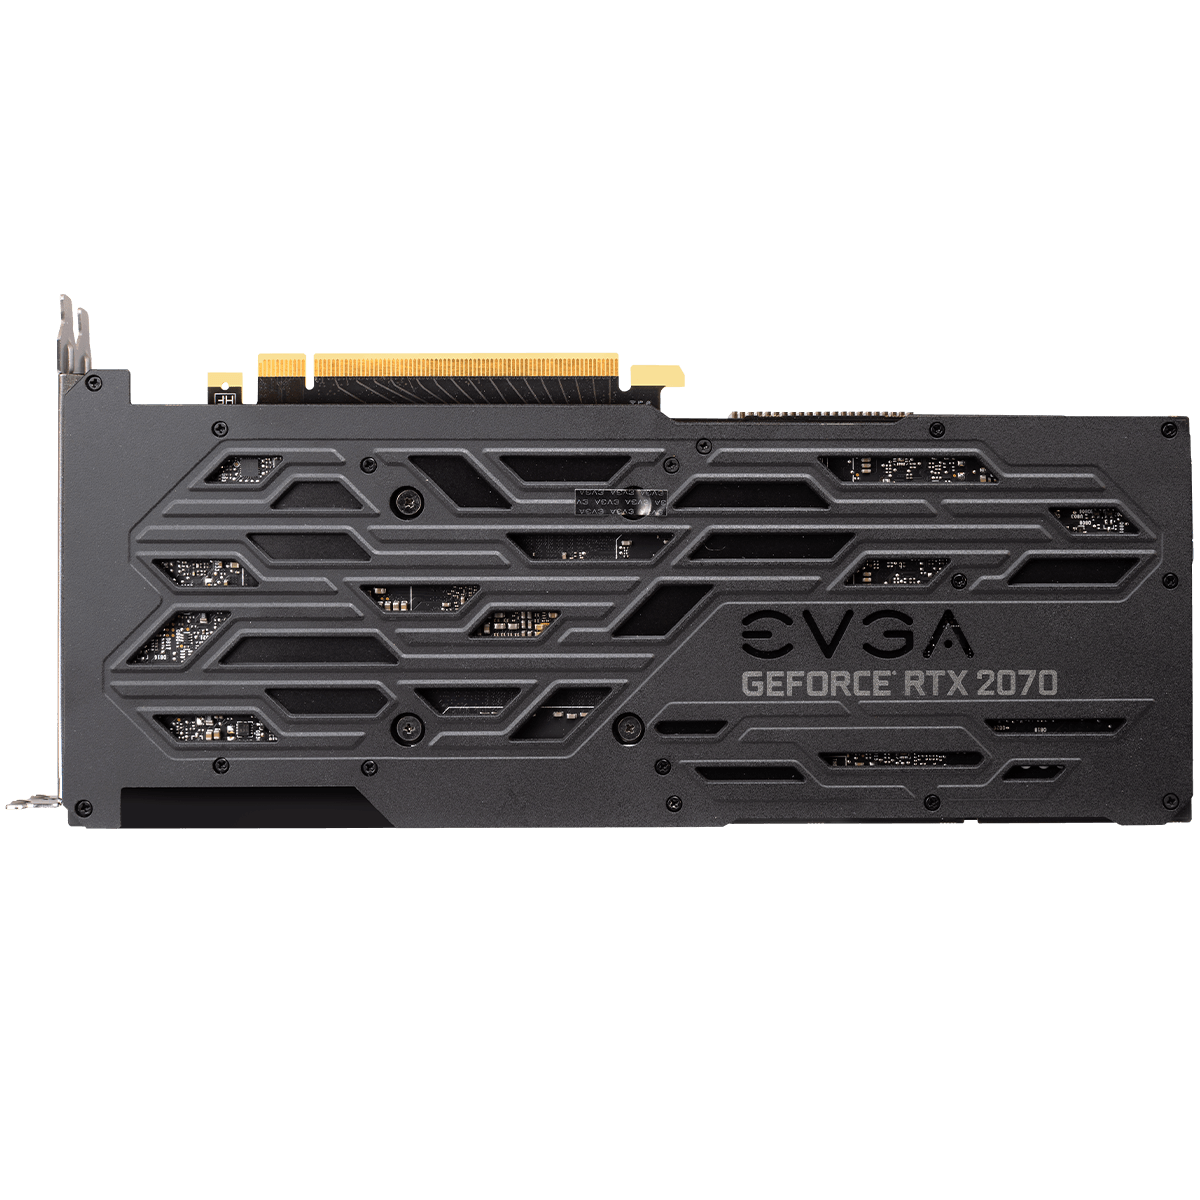 EVGA GeForce RTX 2070 XC GAMING 8GB GDDR6 Dual HDB Fans & RGB LED Video Graphics Card 08G-P4-2172-KR